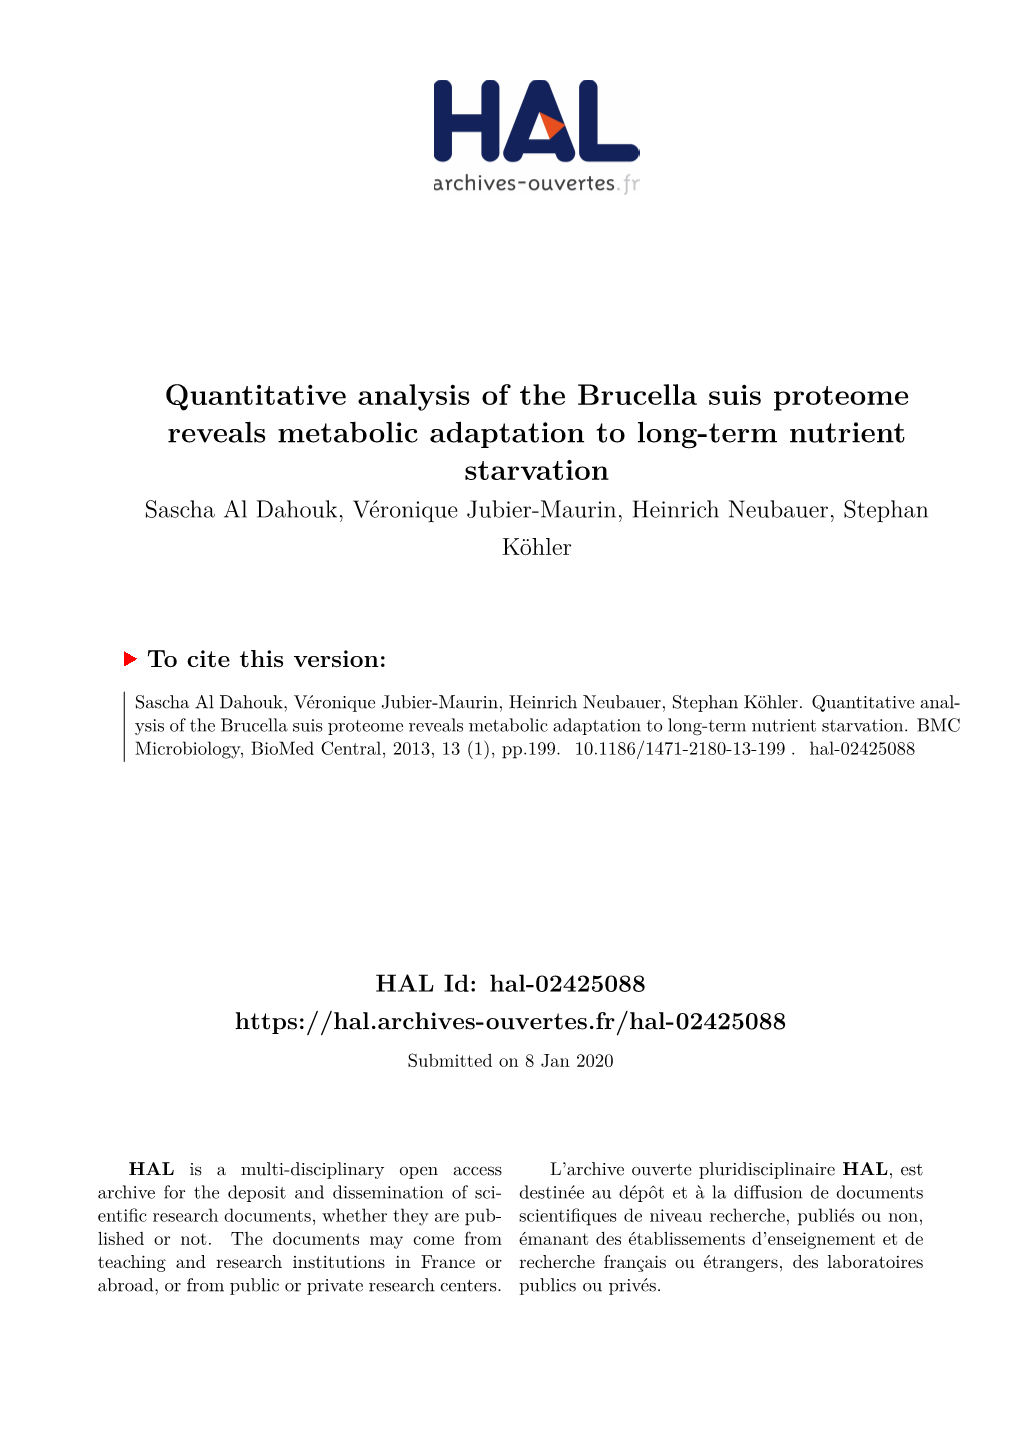 Quantitative Analysis of the Brucella Suis Proteome Reveals Metabolic